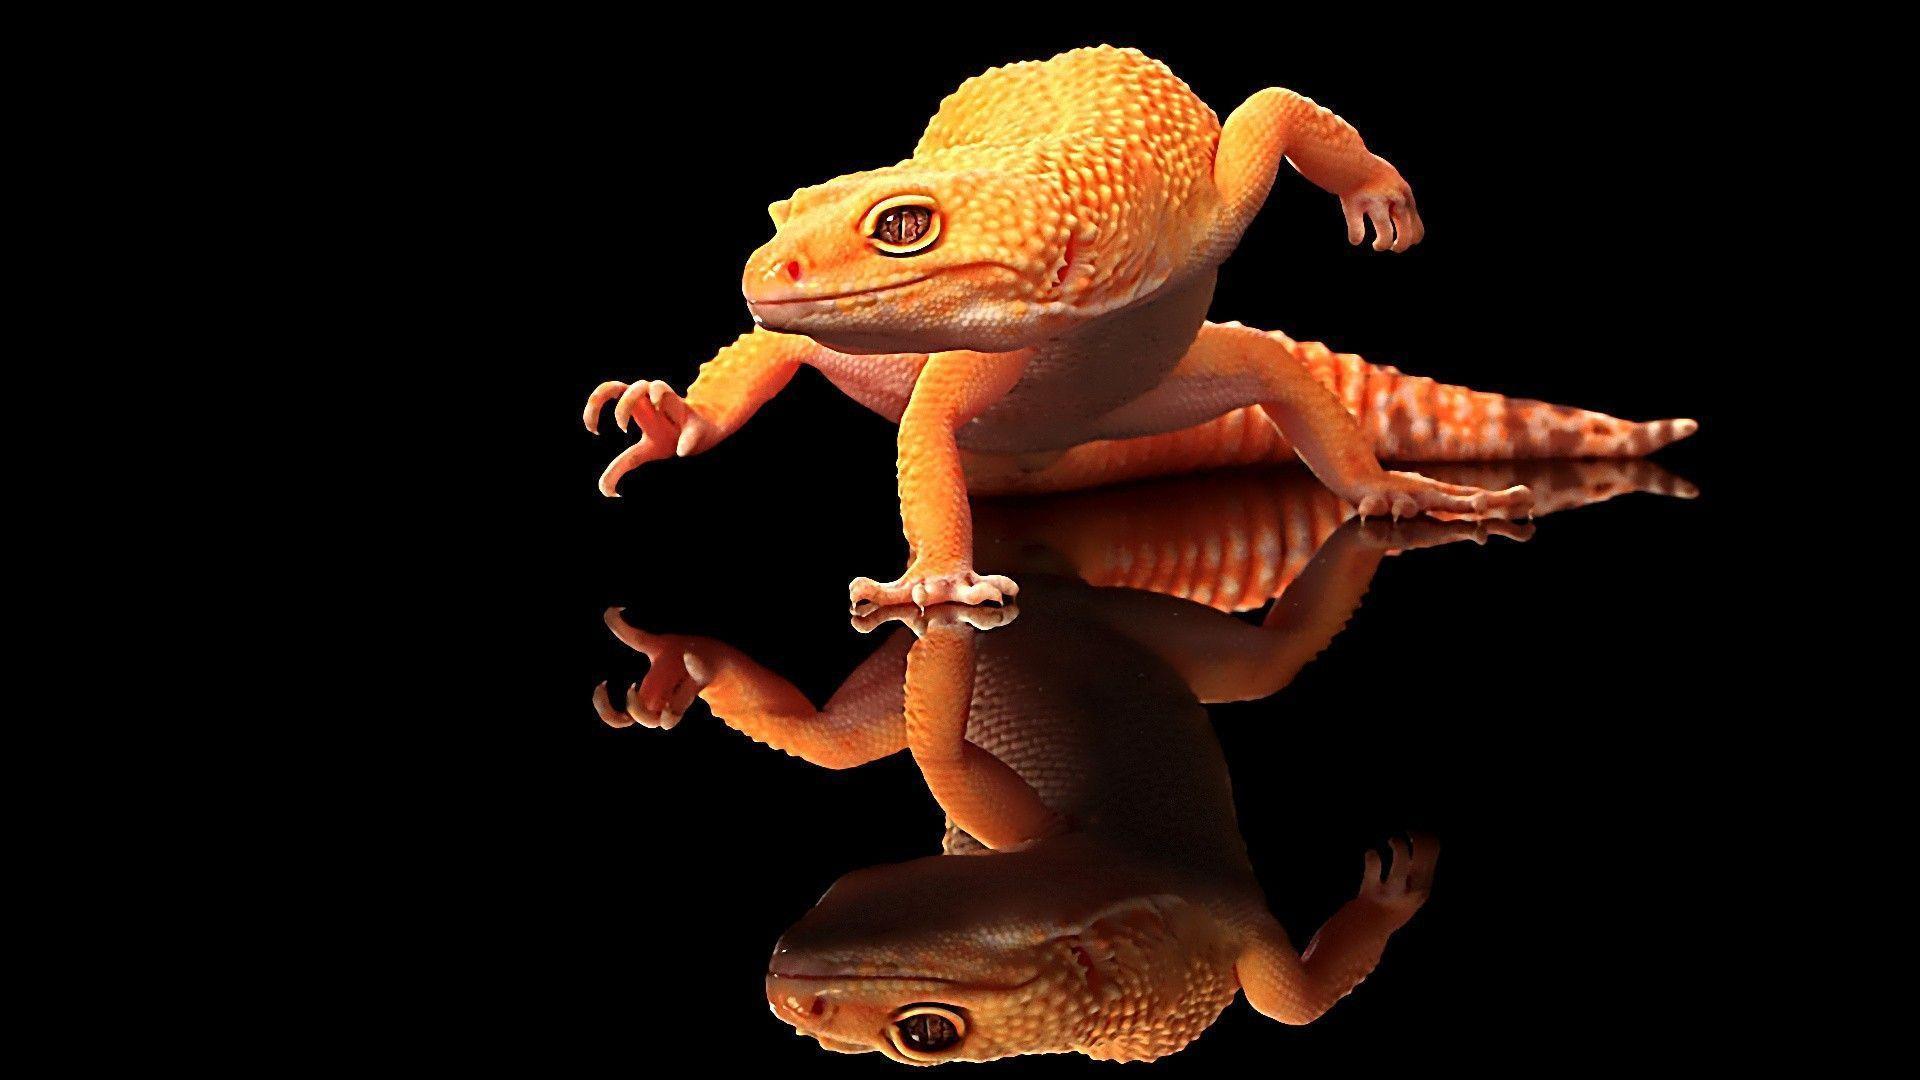 Cool Lizard Wallpaper. Download HD Wallpaper